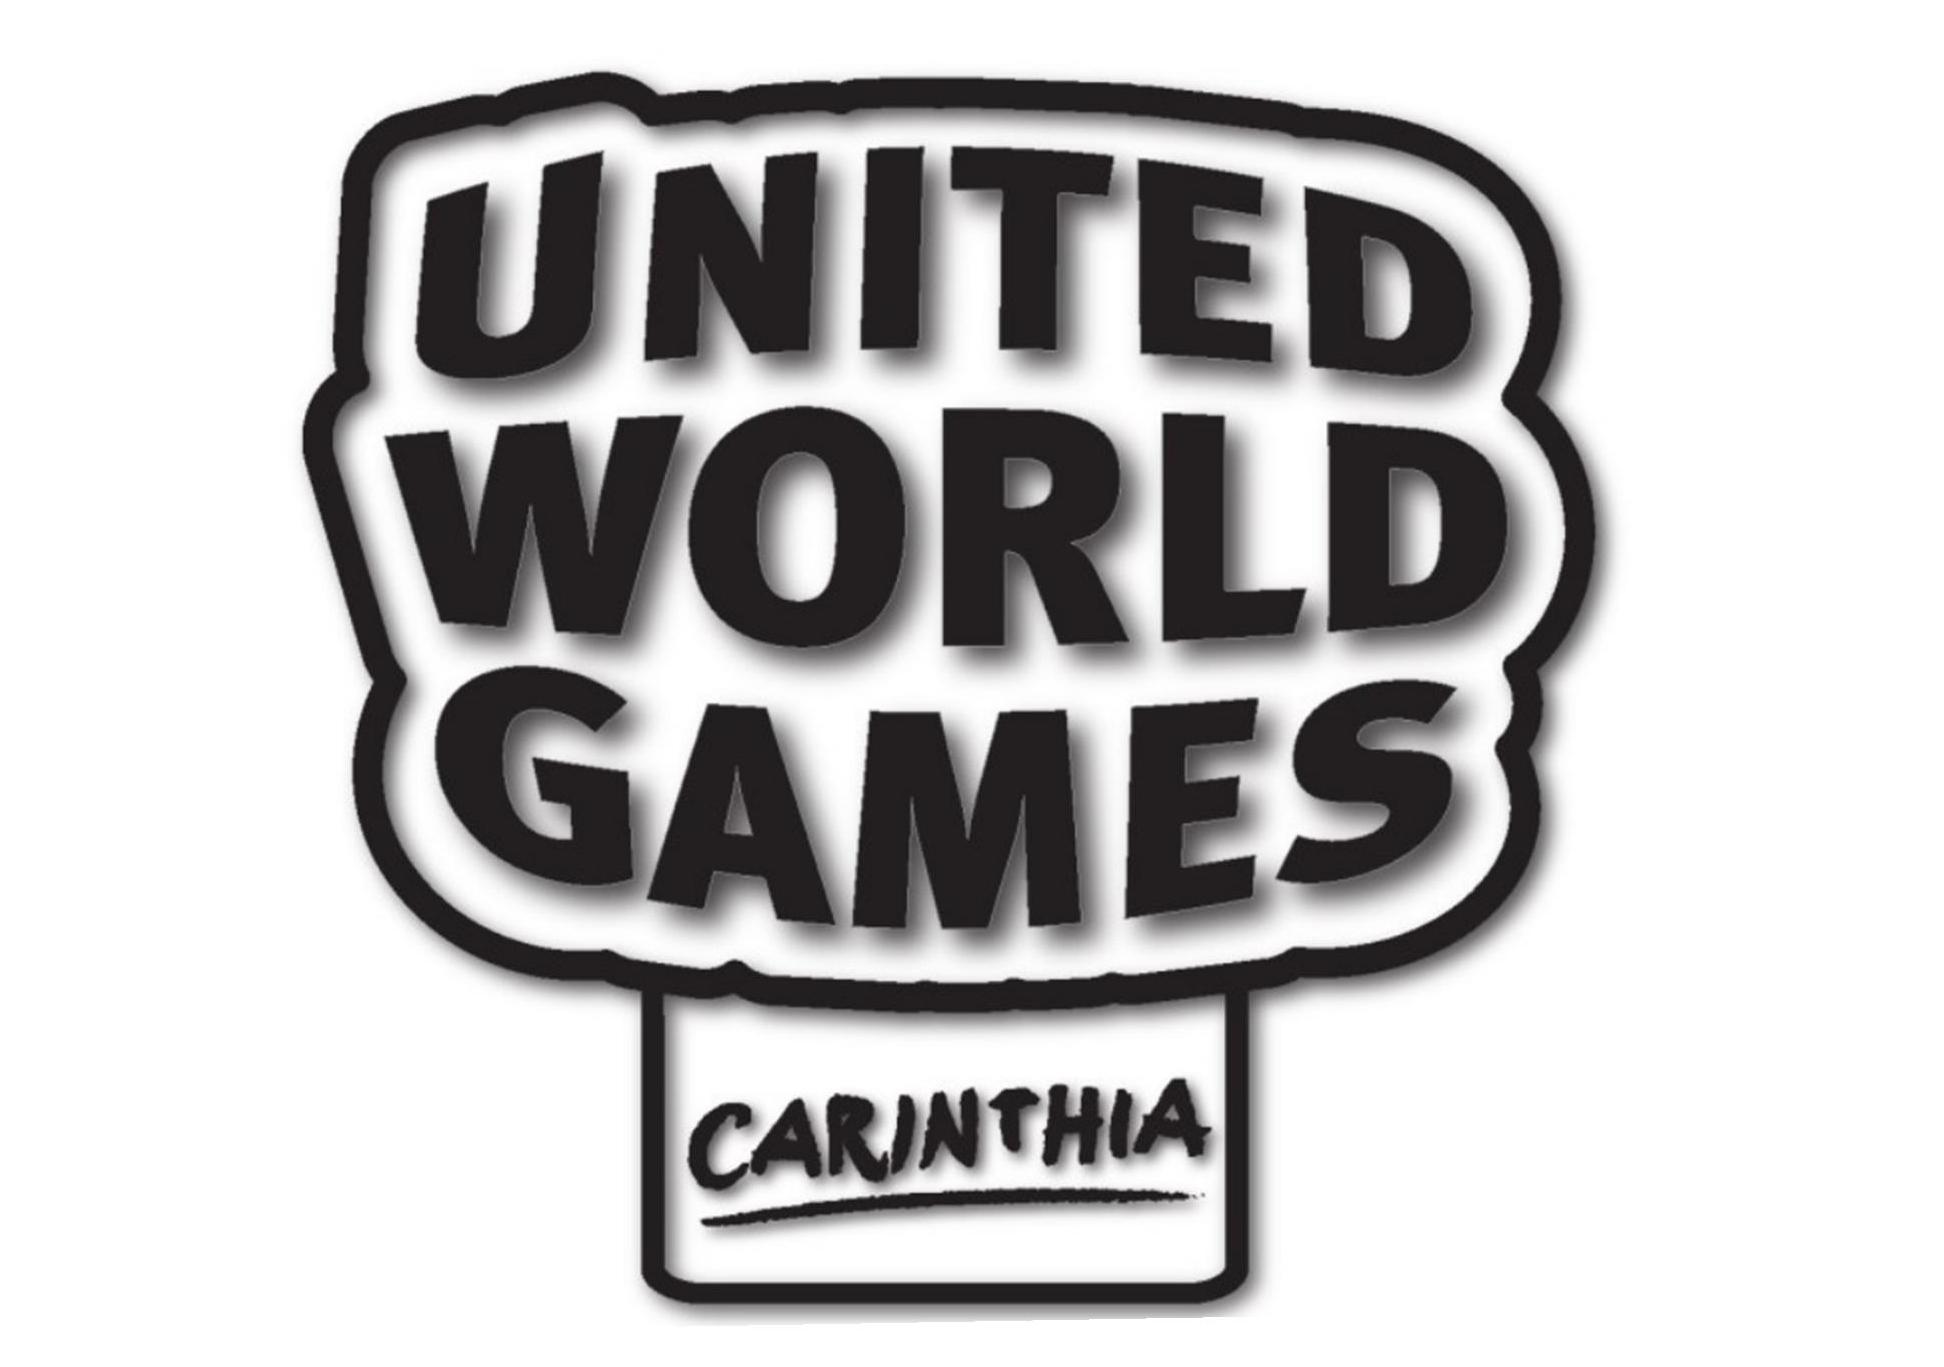 United world games